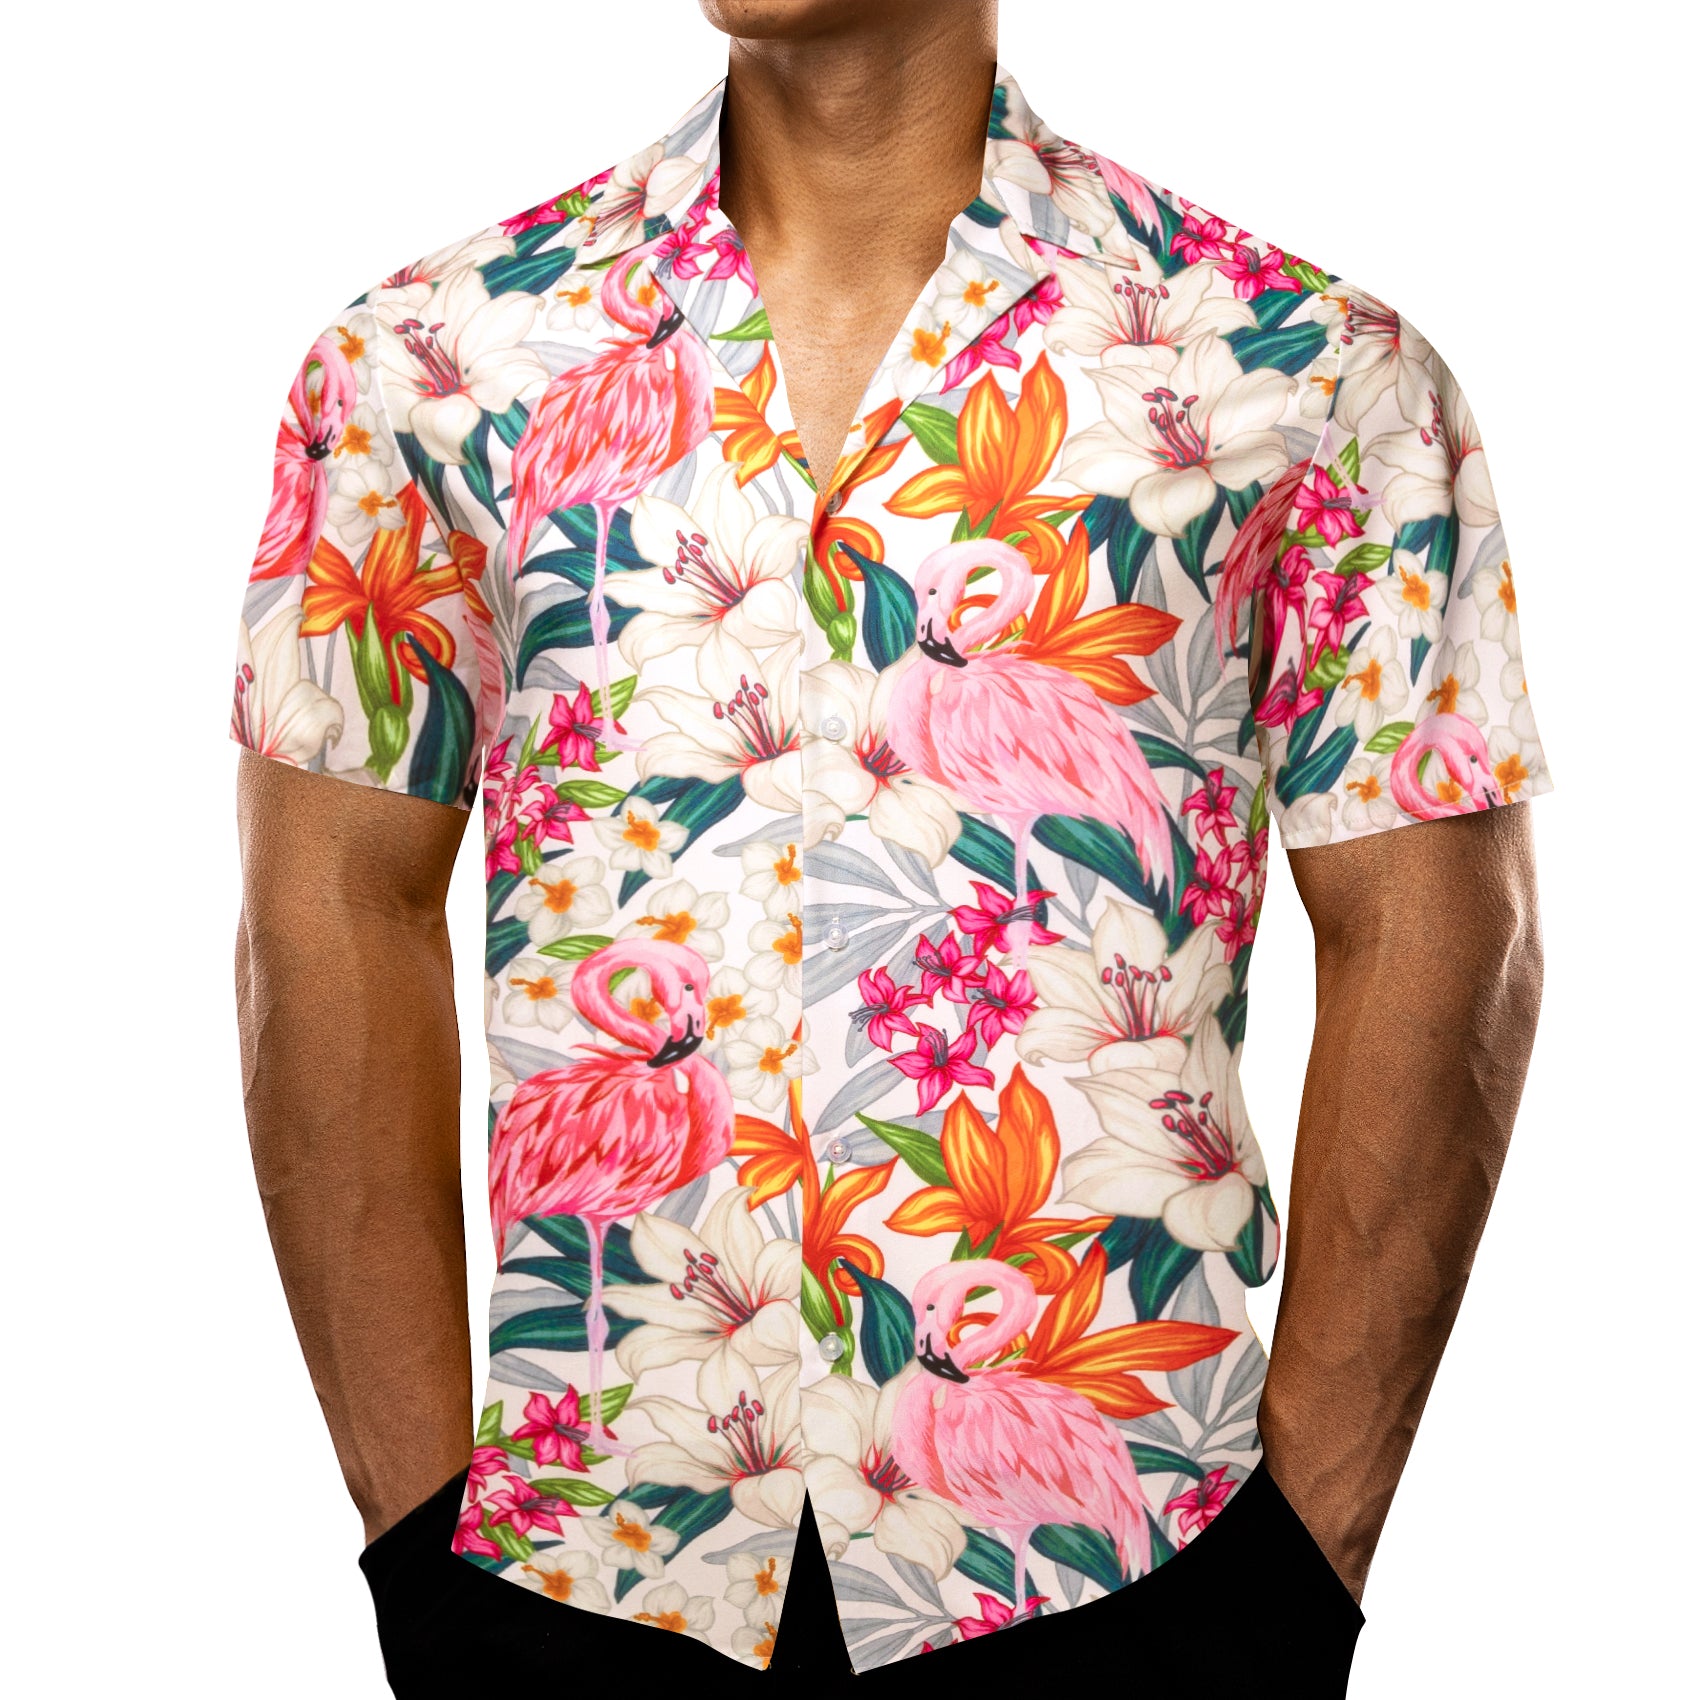 Men's Colorful Floral Pattern Short Sleeves Summer Hawaii Shirt